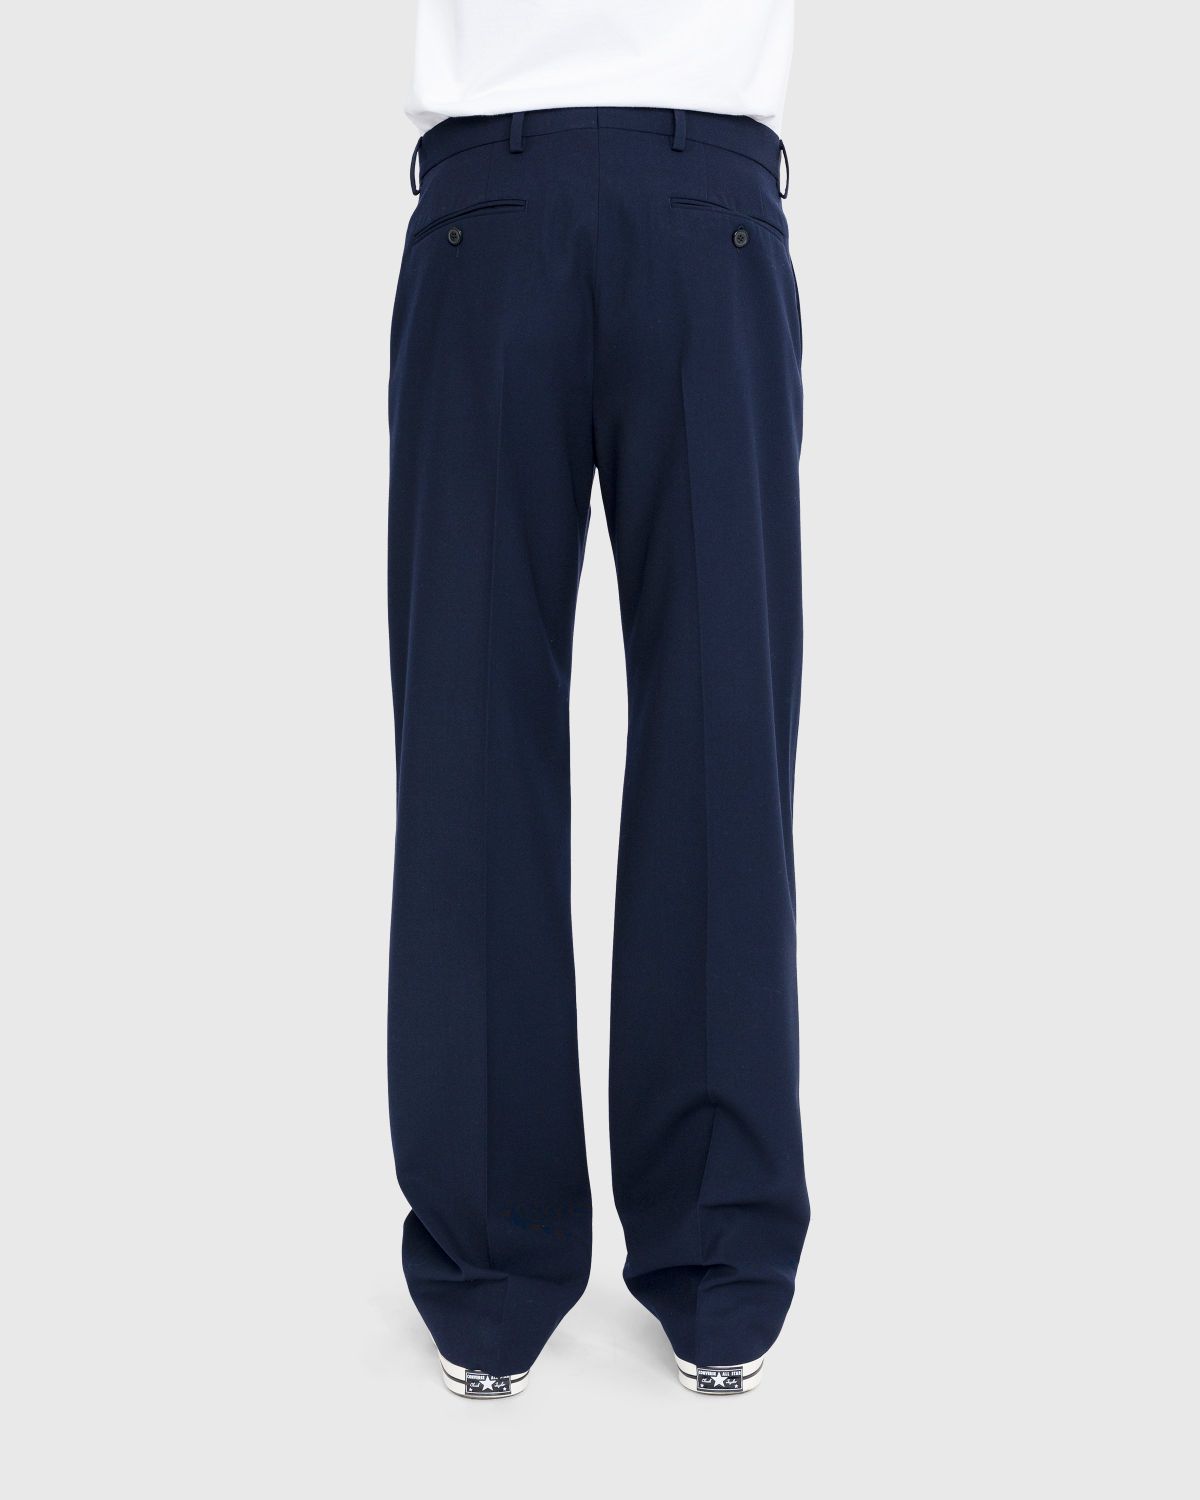 Dries van Noten – Pinnet Long Pants Blue - Pants - Blue - Image 4